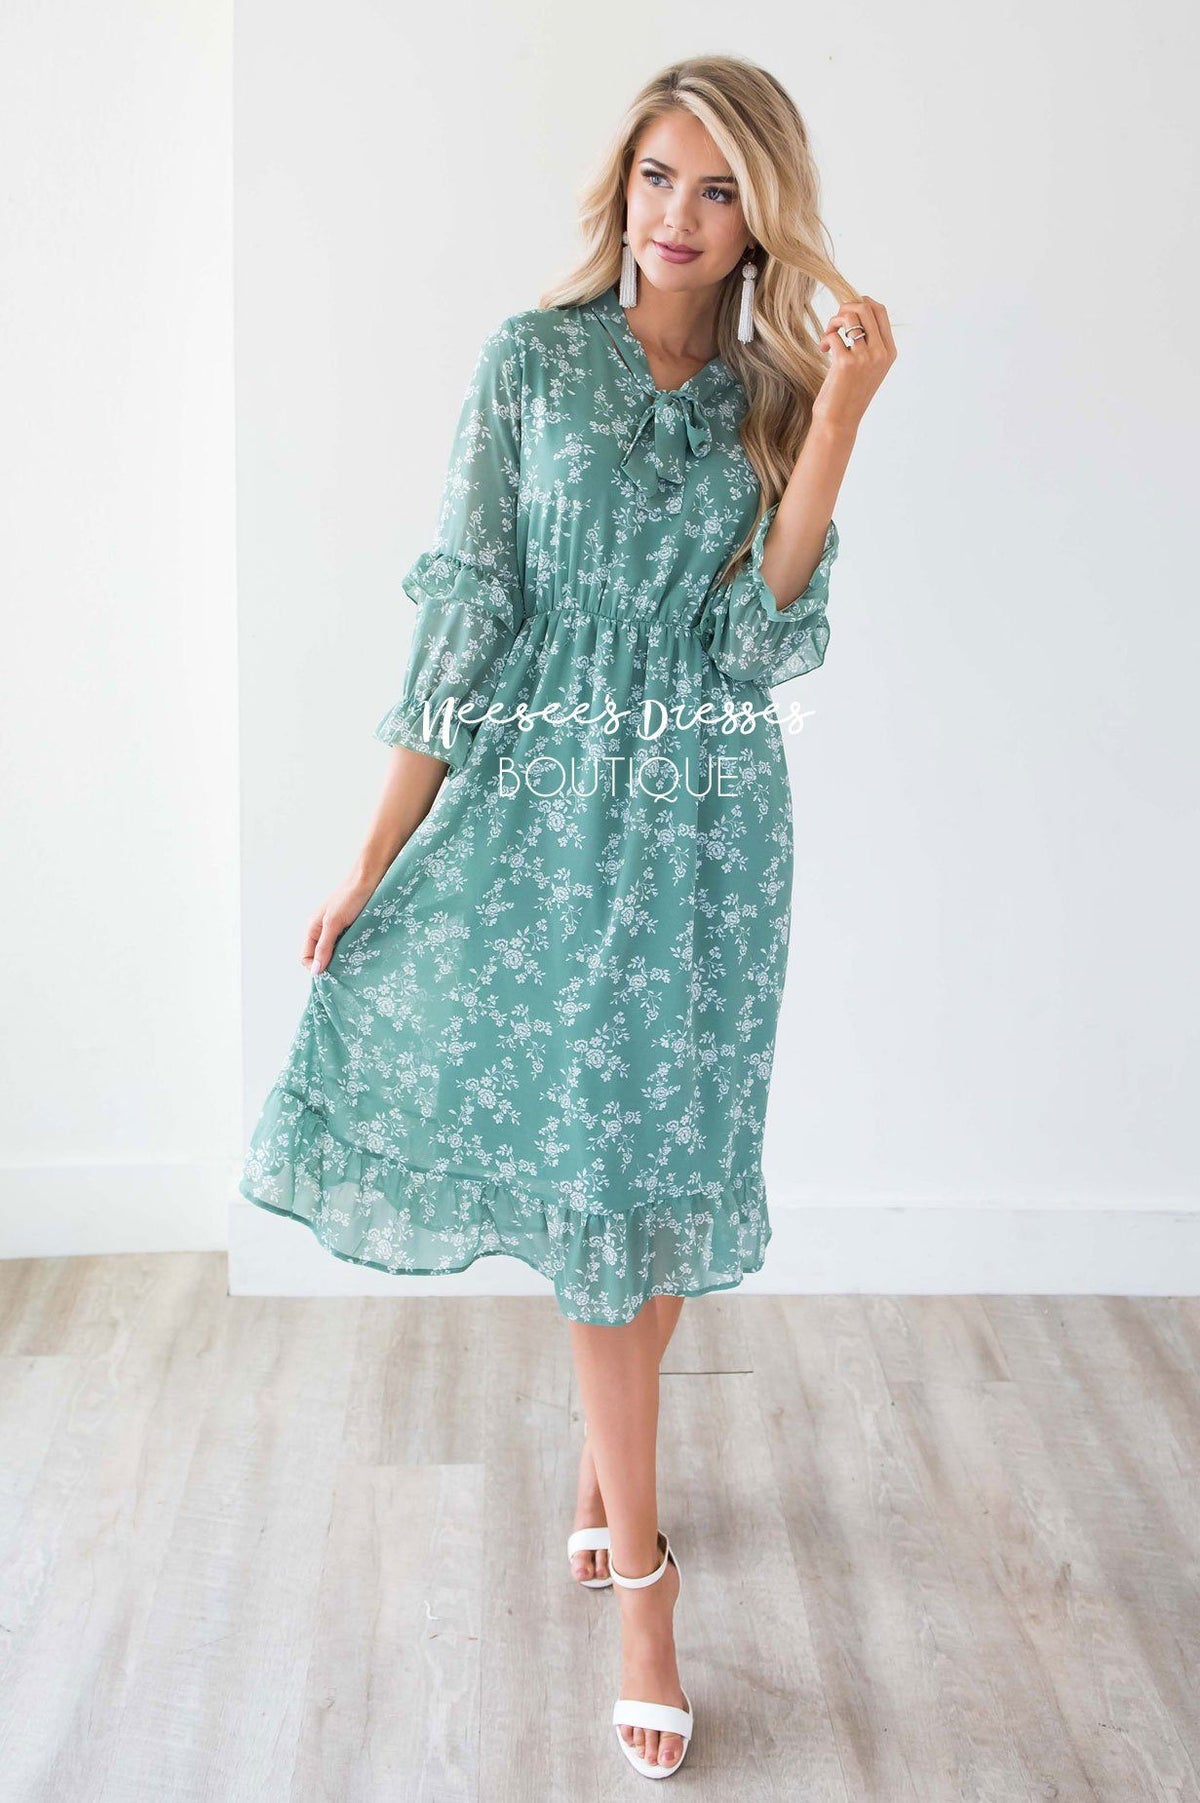 Aloe Green White Floral Dress | Cute Modest Dresses - NeeSee's Dresses